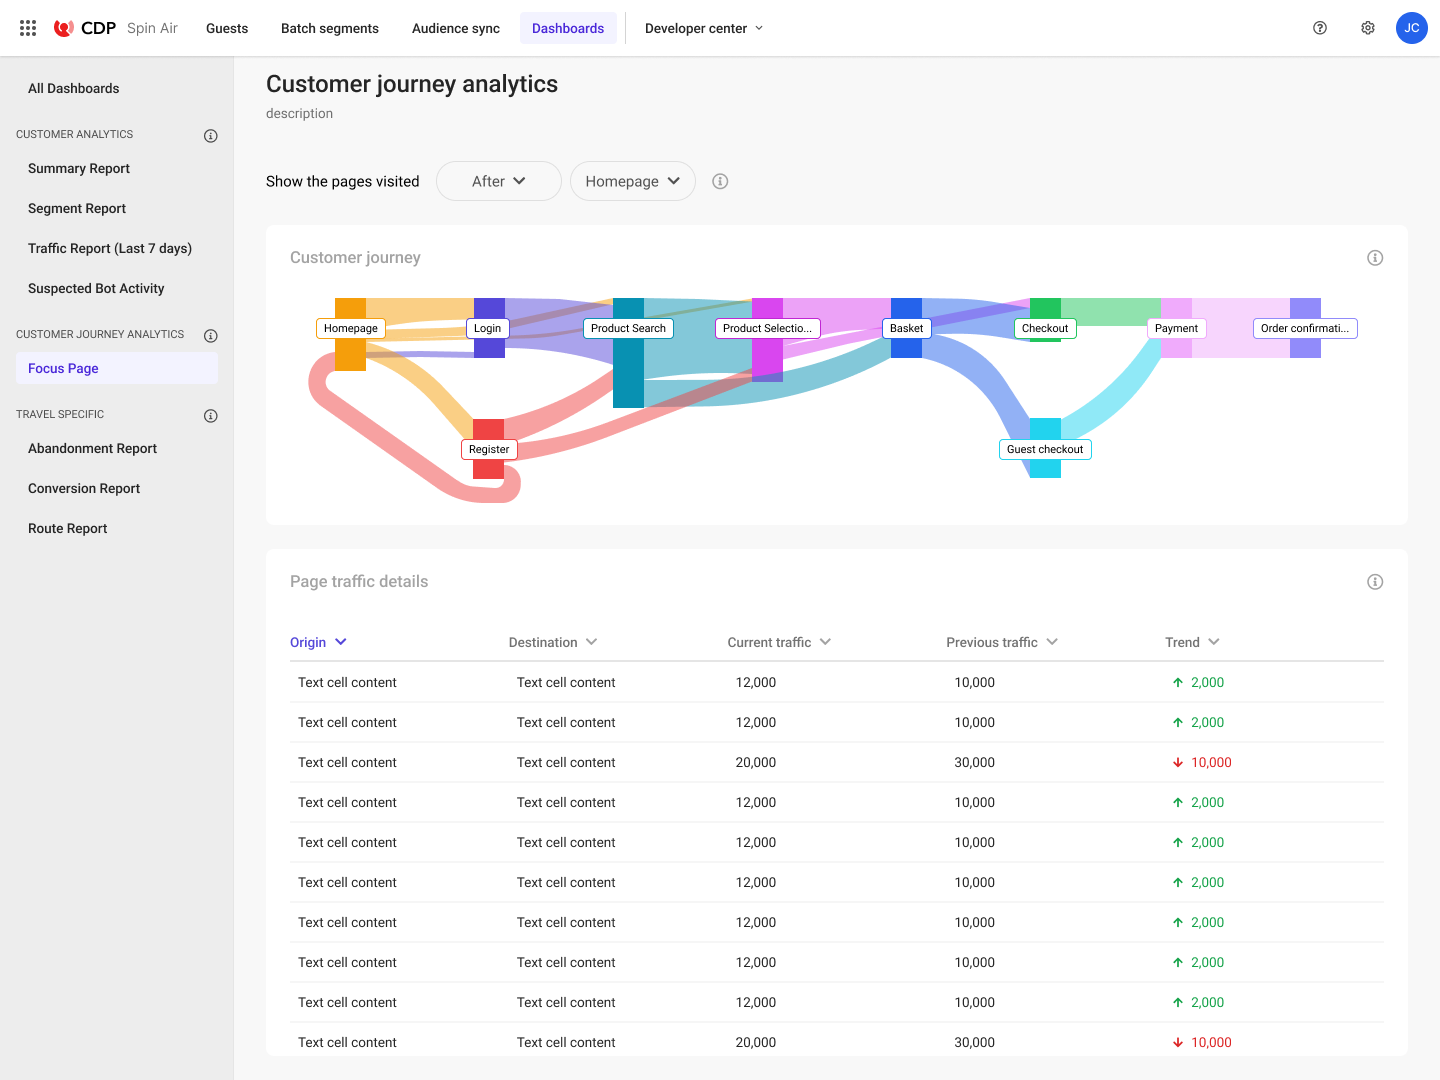 New Dashboard - Customer Journey Analytics